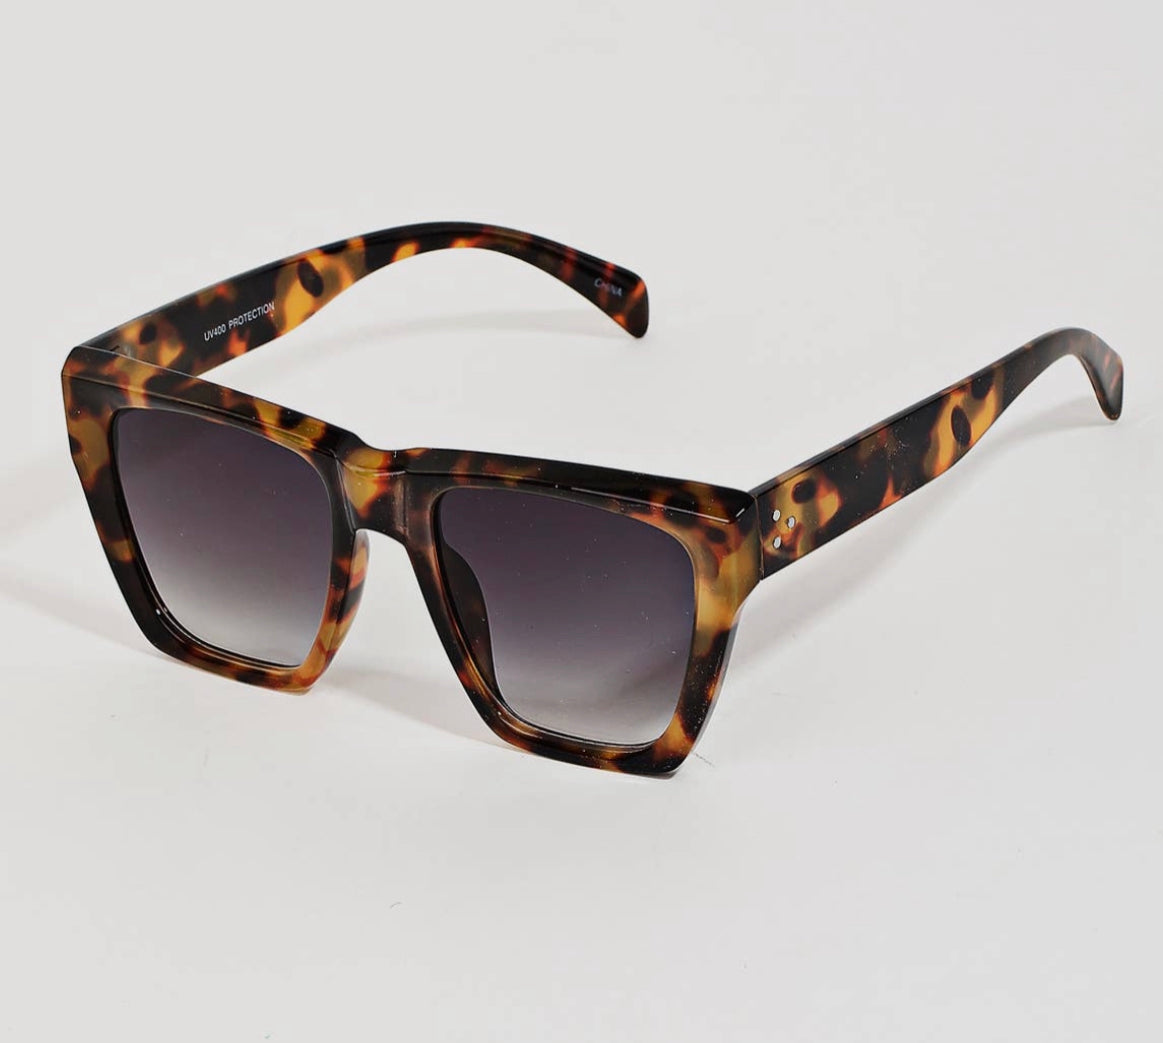 The Orange County Sunglasses